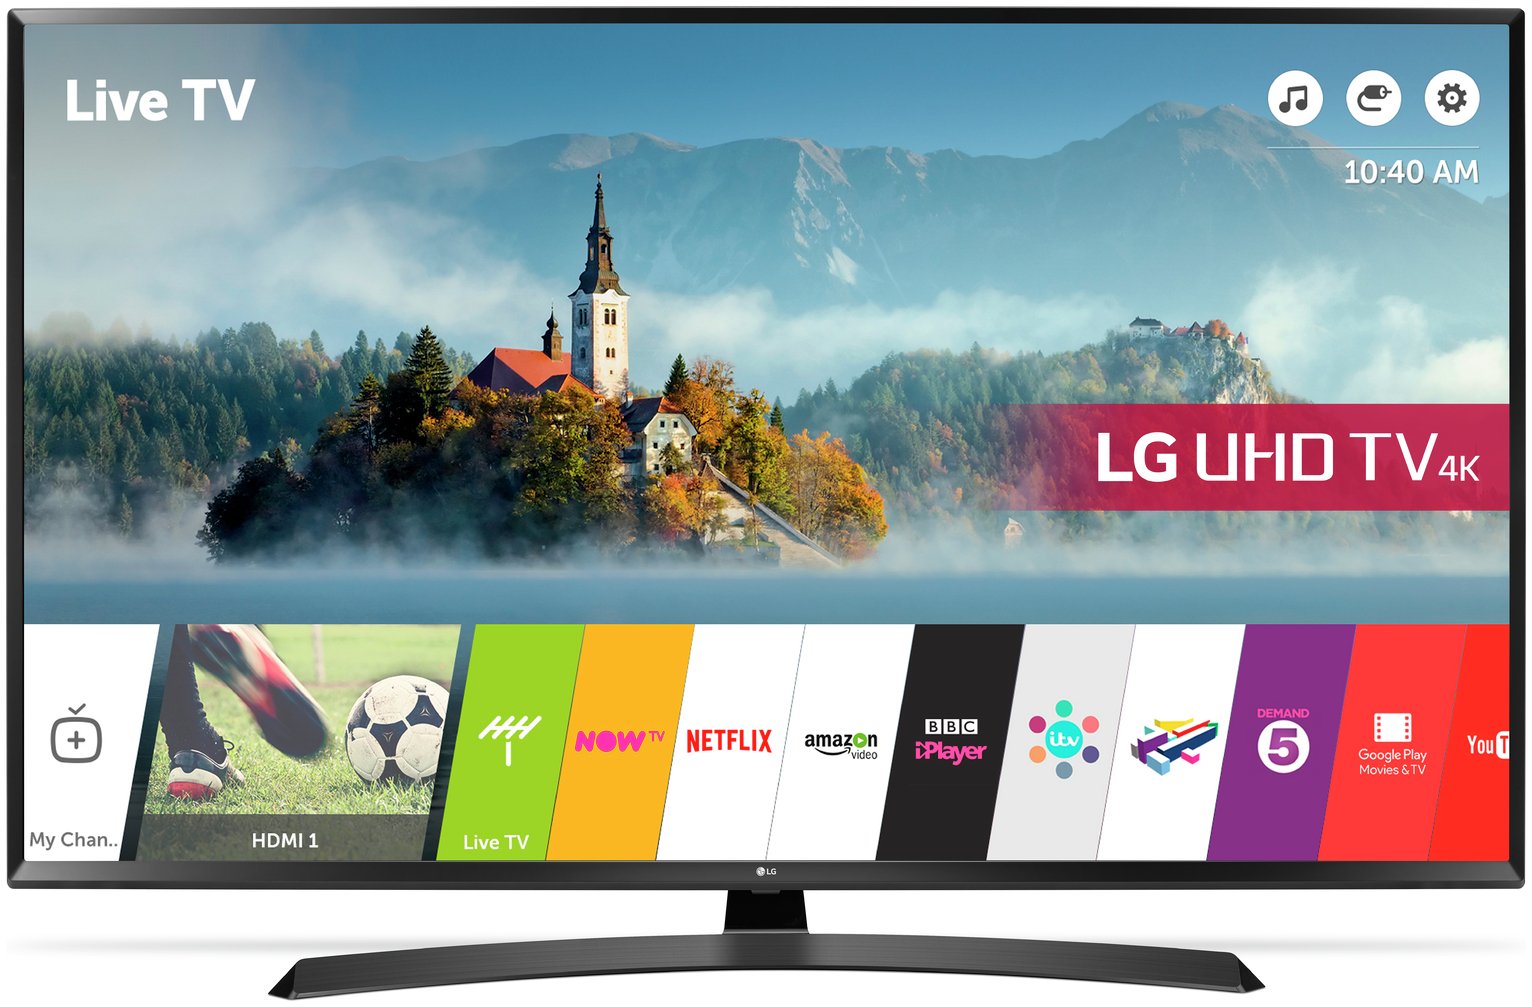 LG 55UJ635V 55 Inch Smart 4K Ultra HD TV with HDR